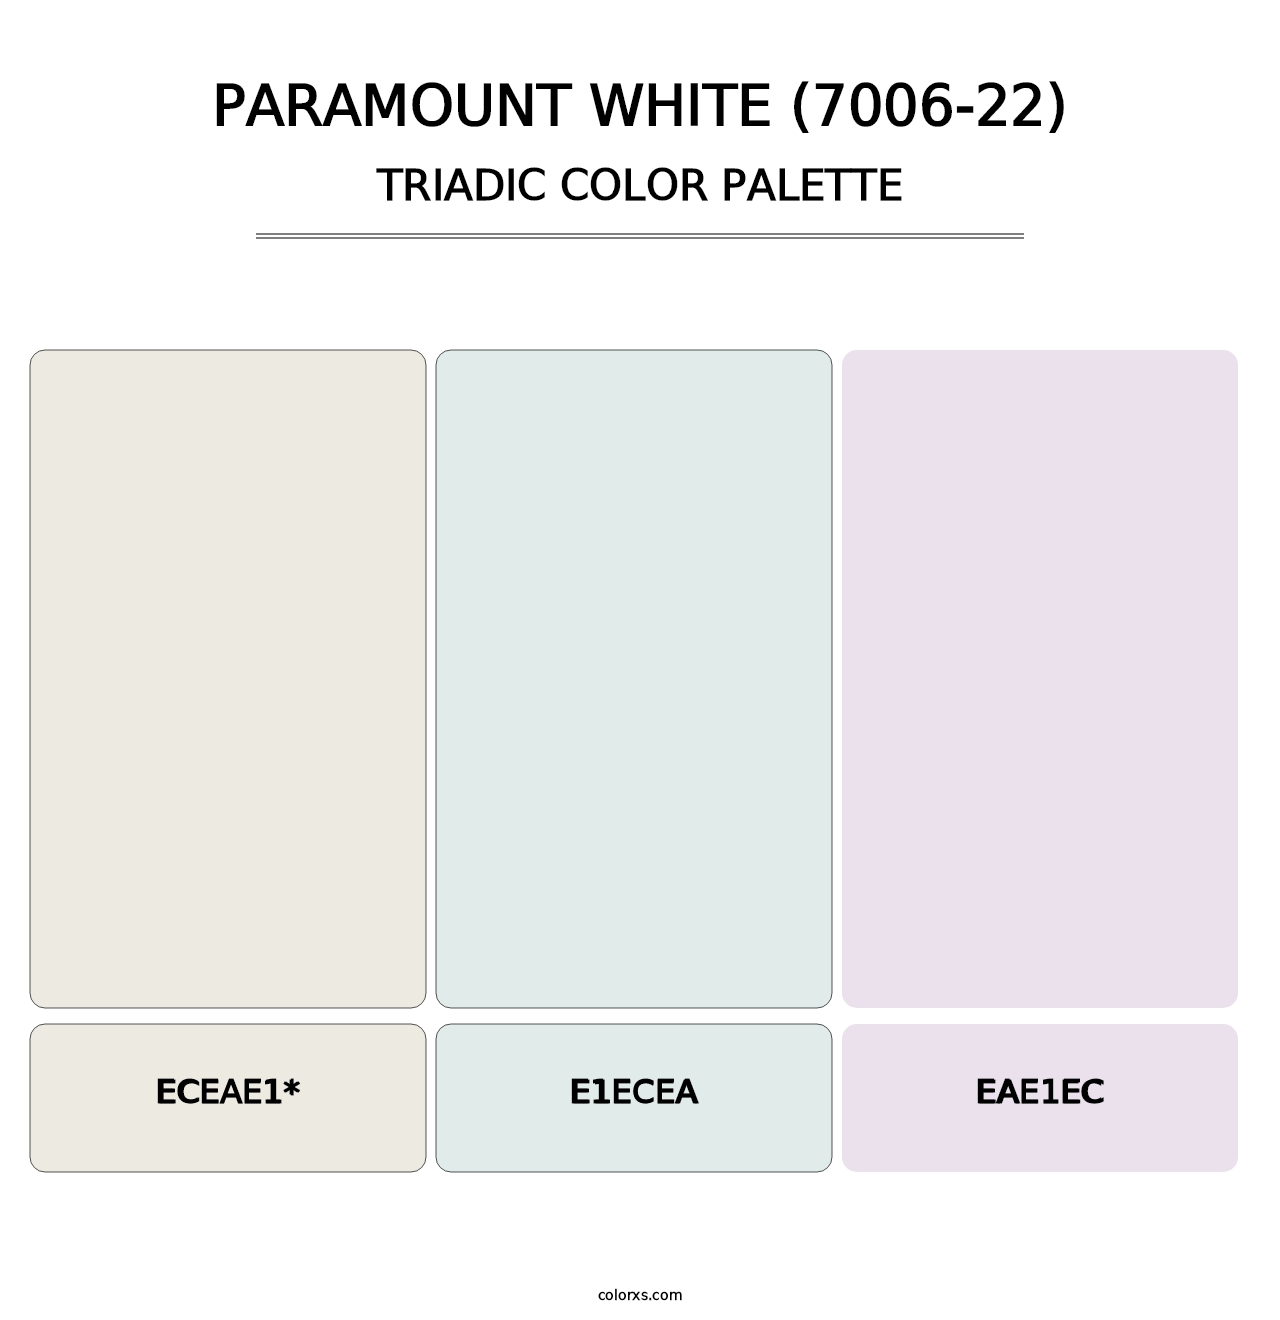 Paramount White (7006-22) - Triadic Color Palette